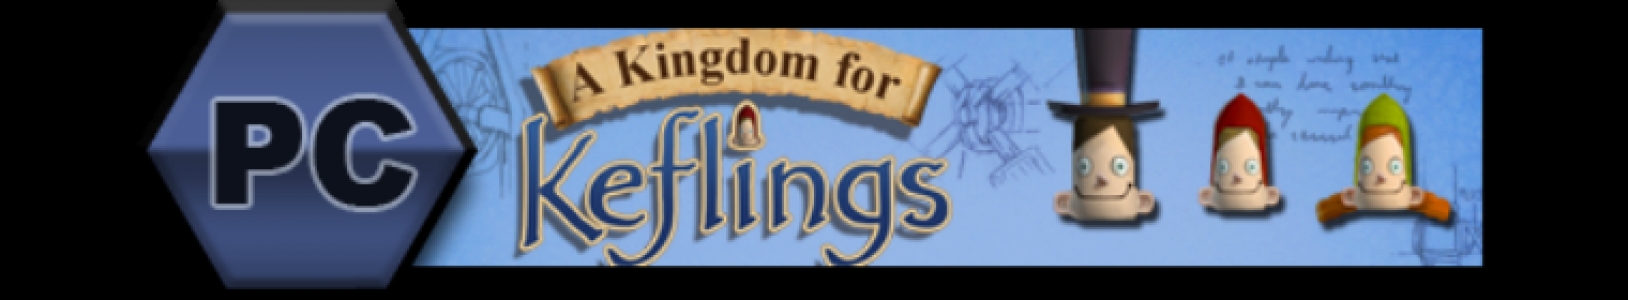 A Kingdom for Keflings banner